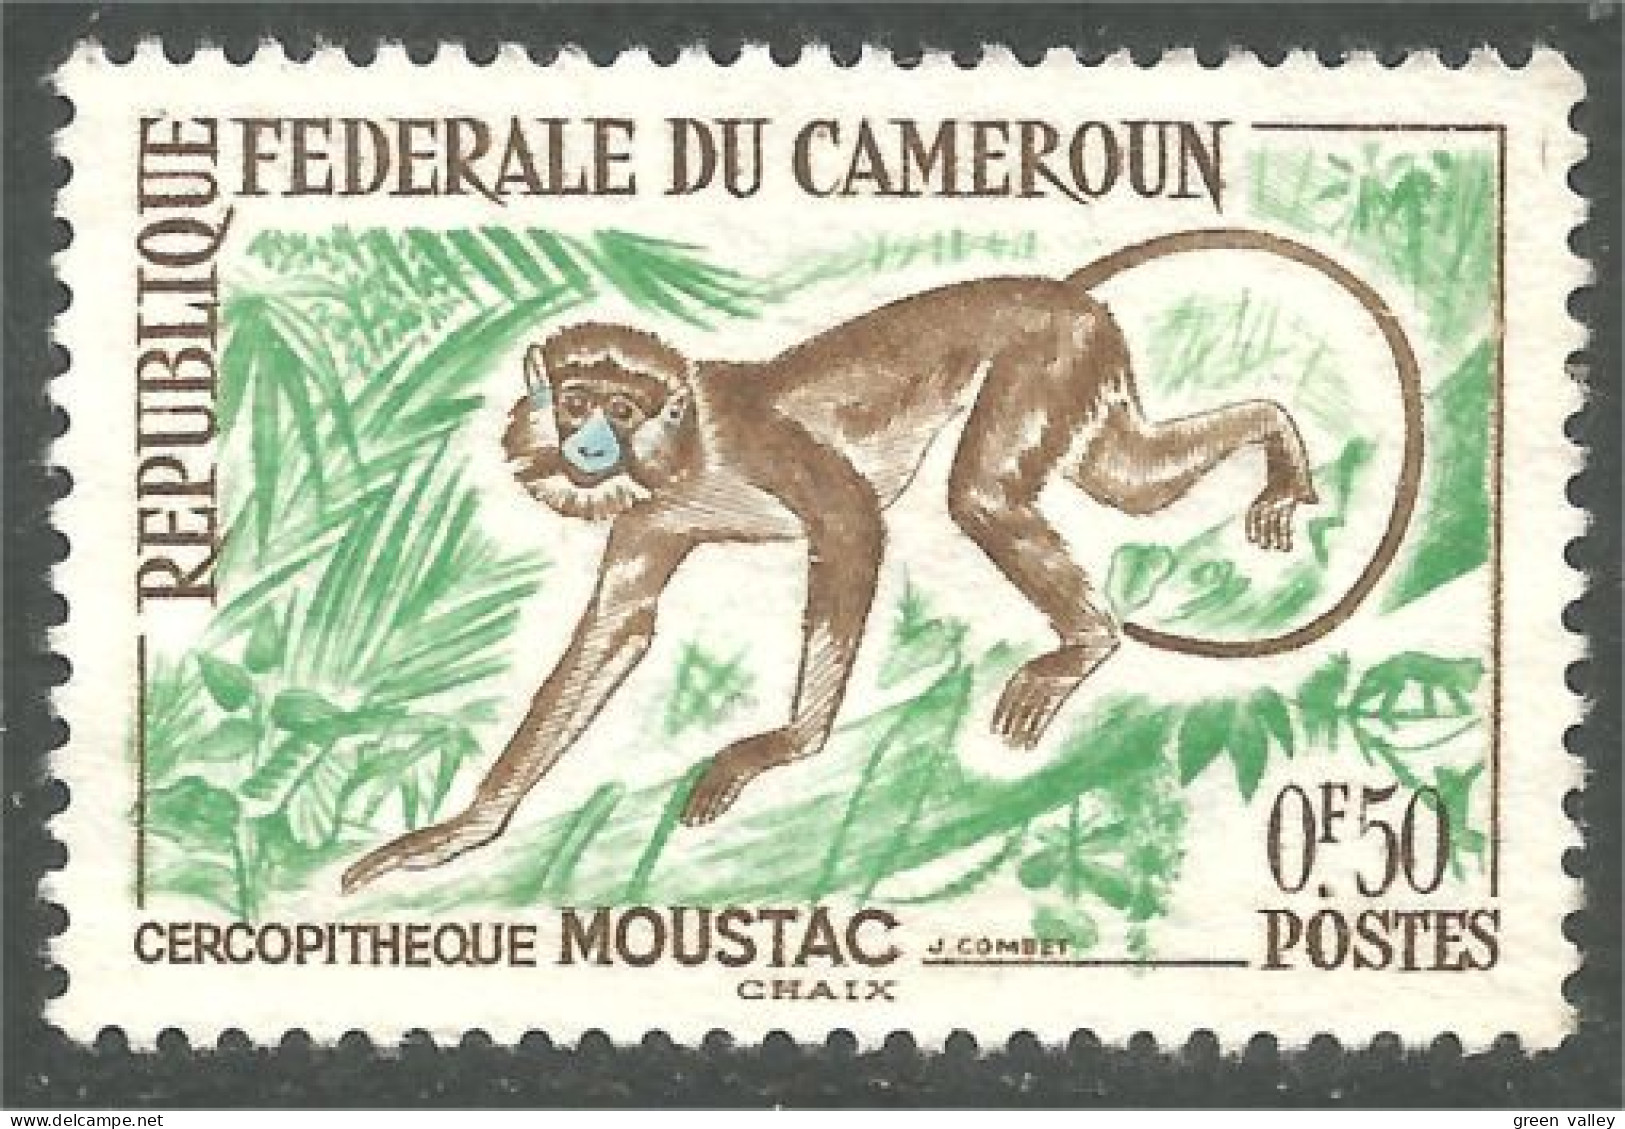 XW01-2629 Cameroun Singe Monkey Ape Scimmia Affe Moustac Sans Gomme - Singes